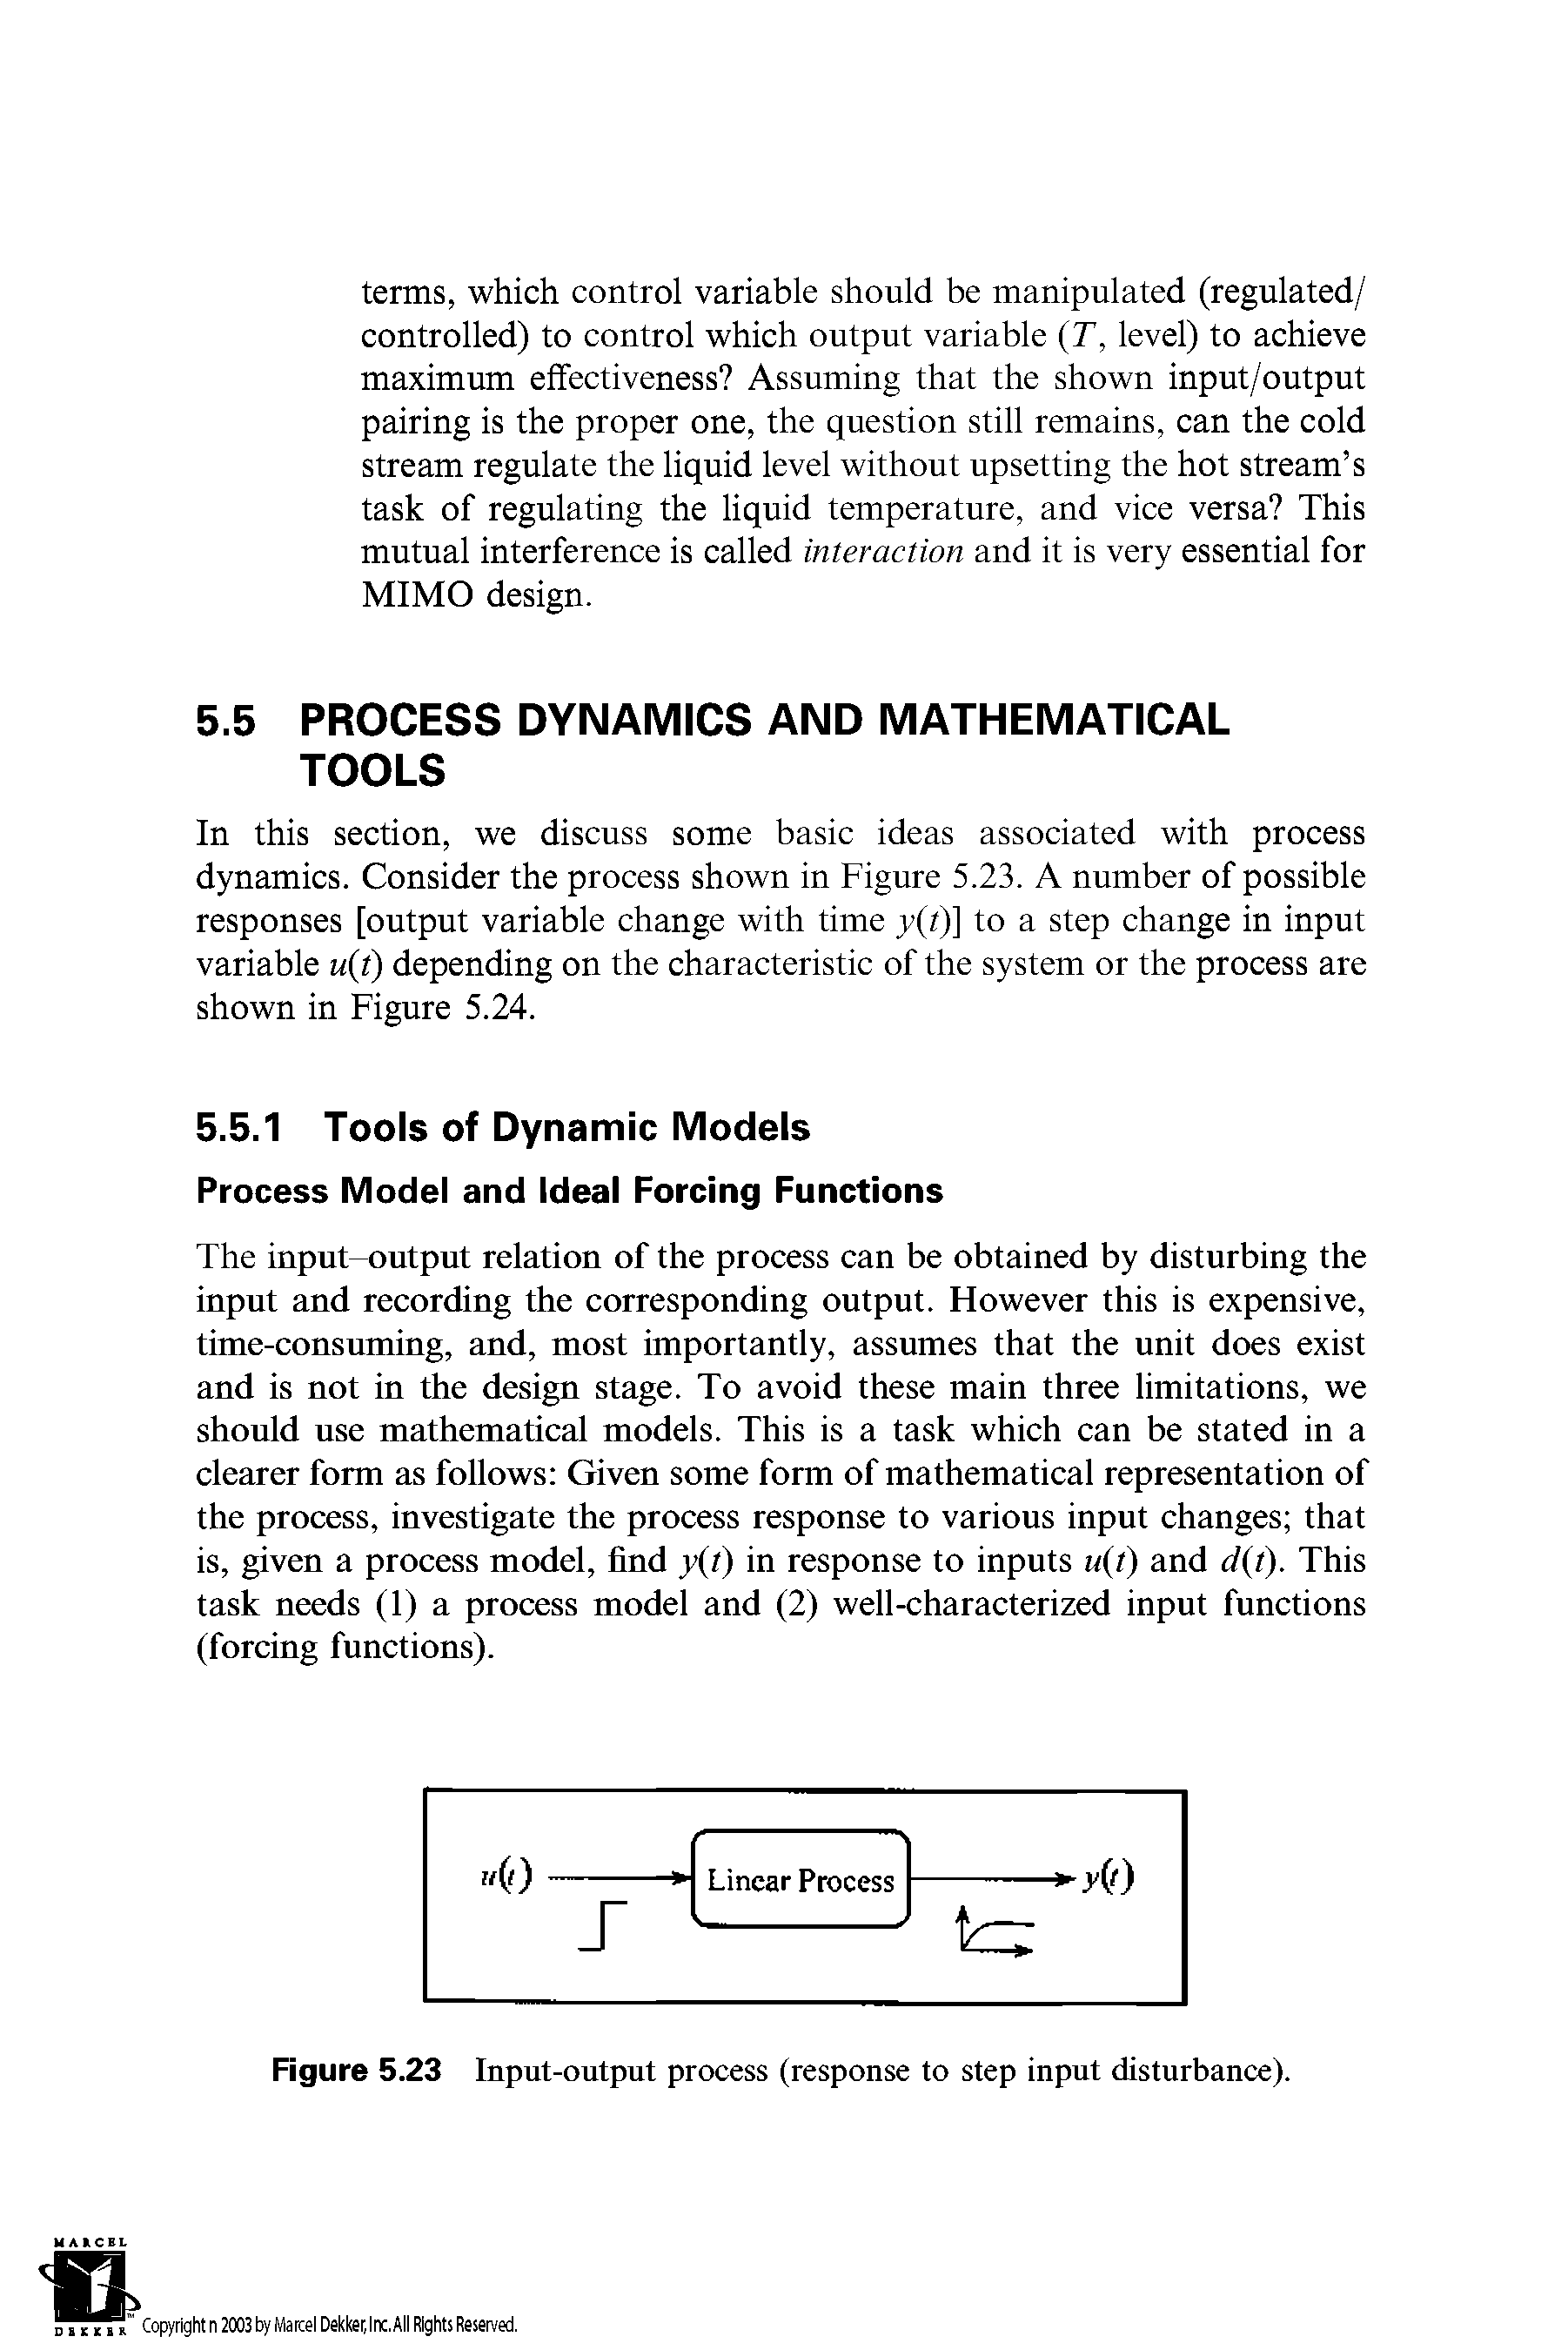 Figure 5.23 Input-output process (response to step input disturbance).